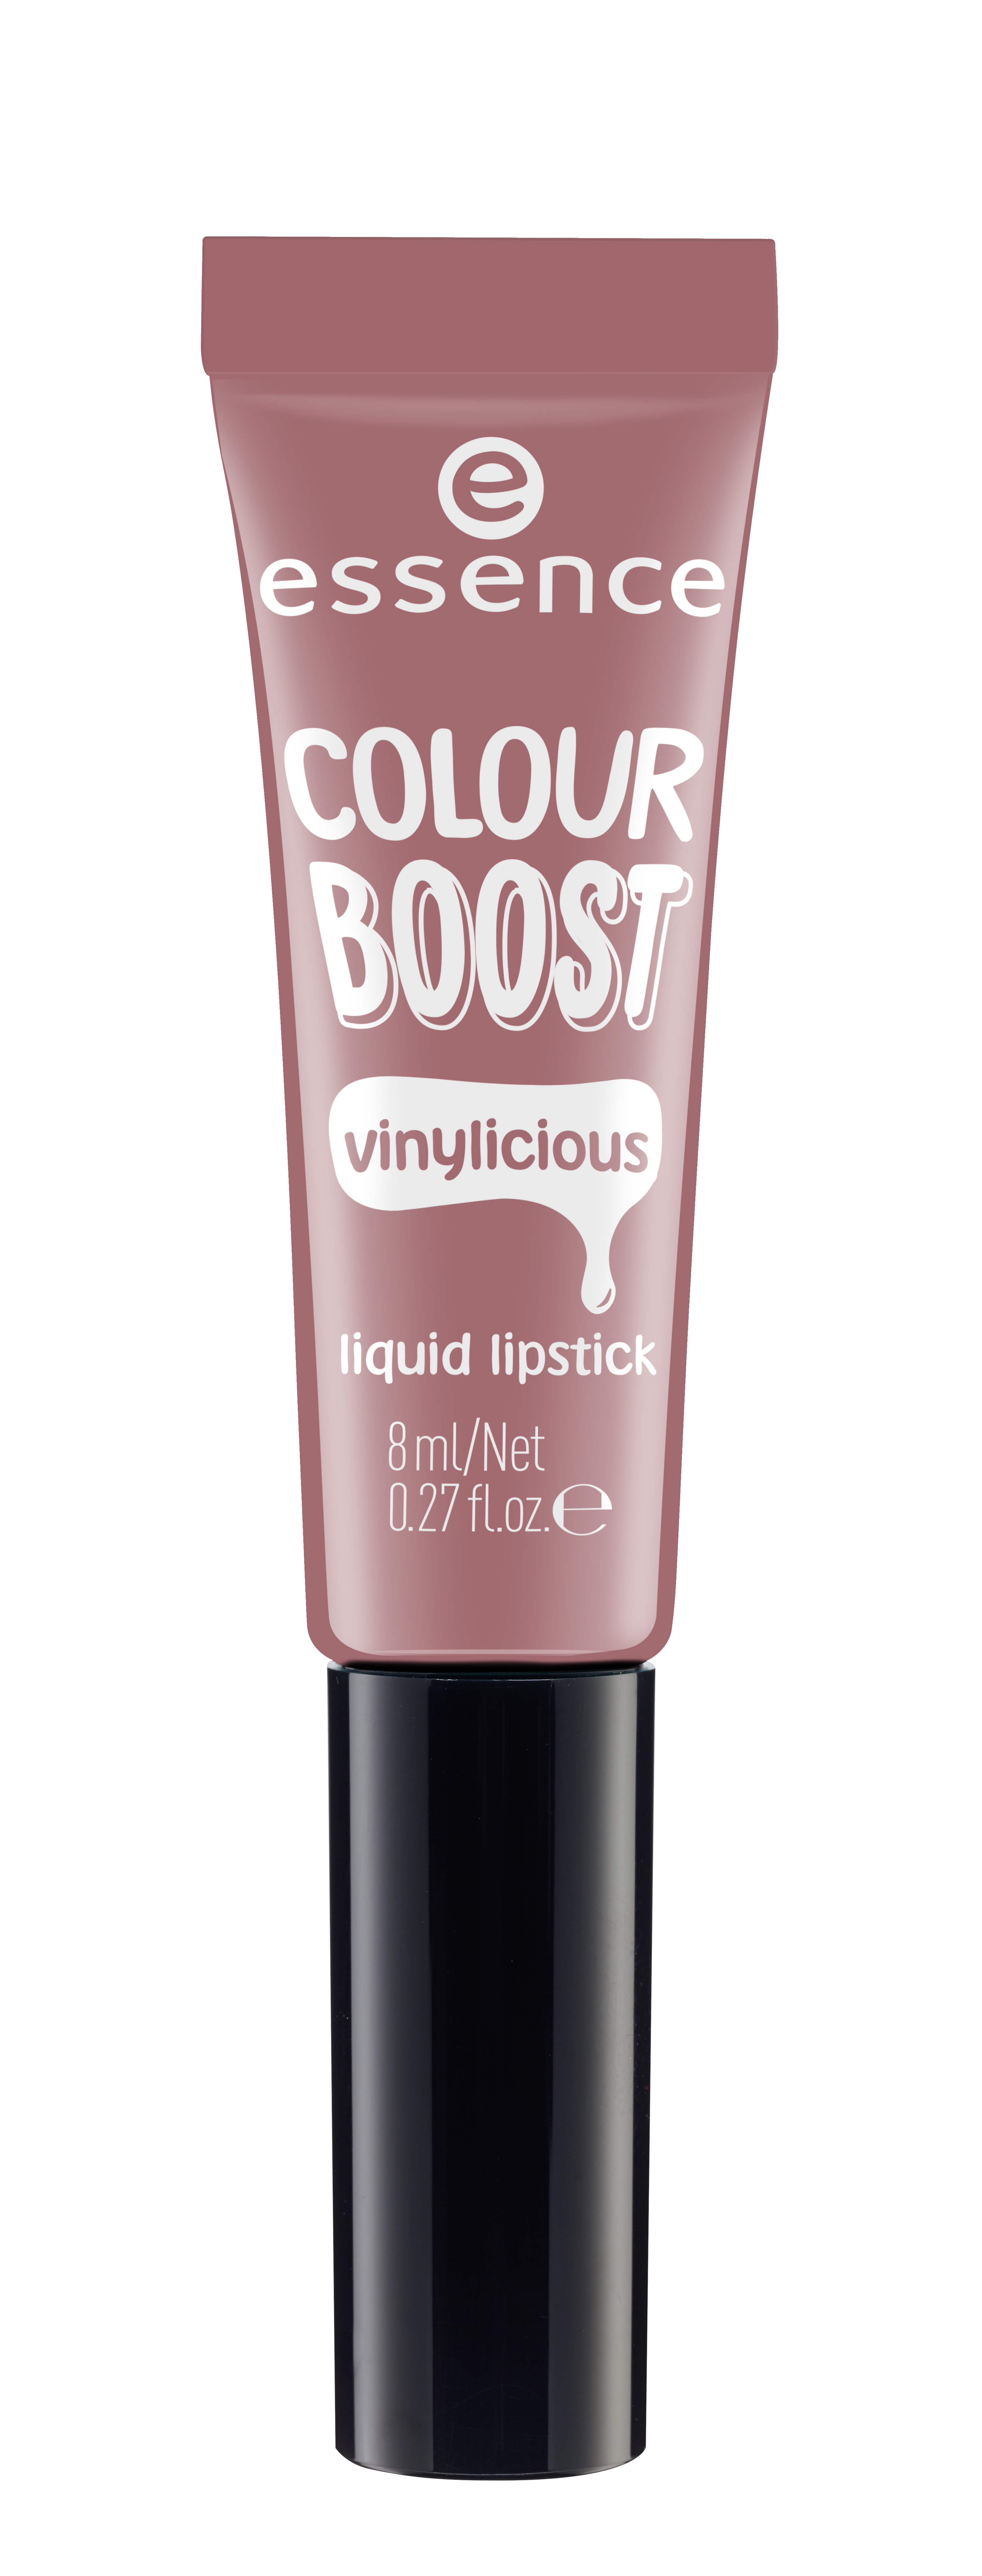 essence colour boost vinylicious liquid lipstick 04